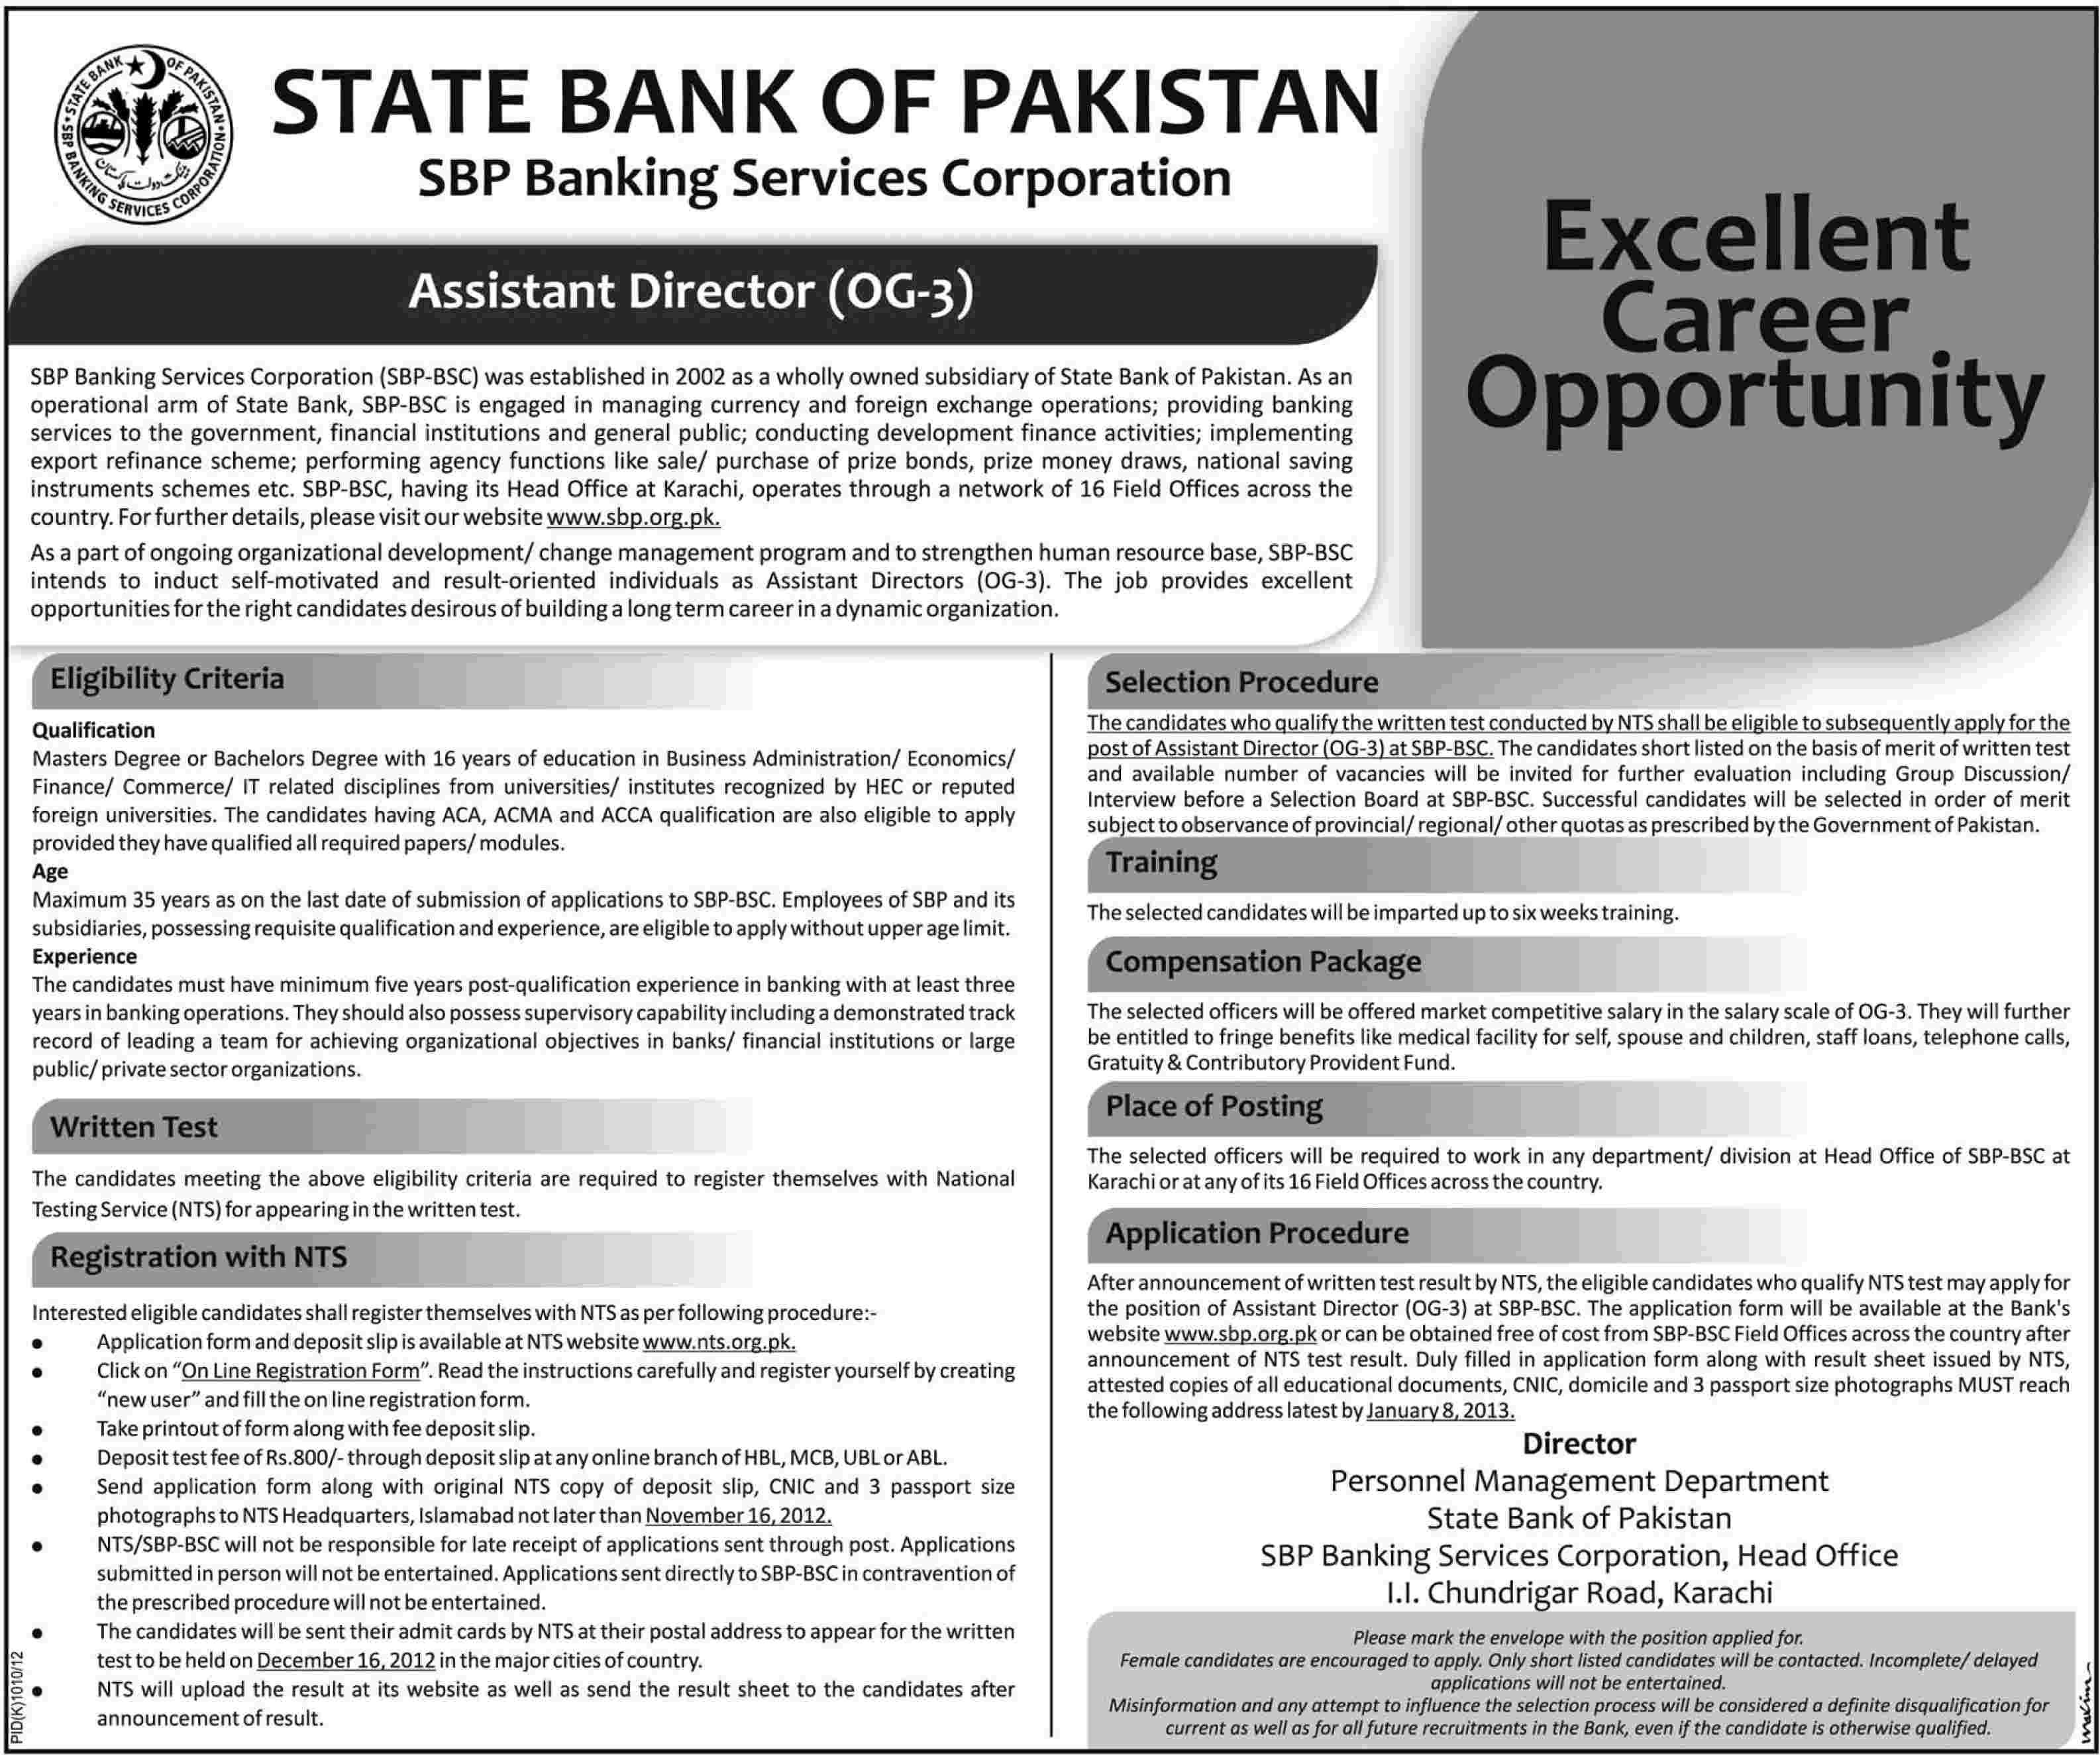 State Bank of Pakistan SBP Requires Assistant Directors (OG-3)